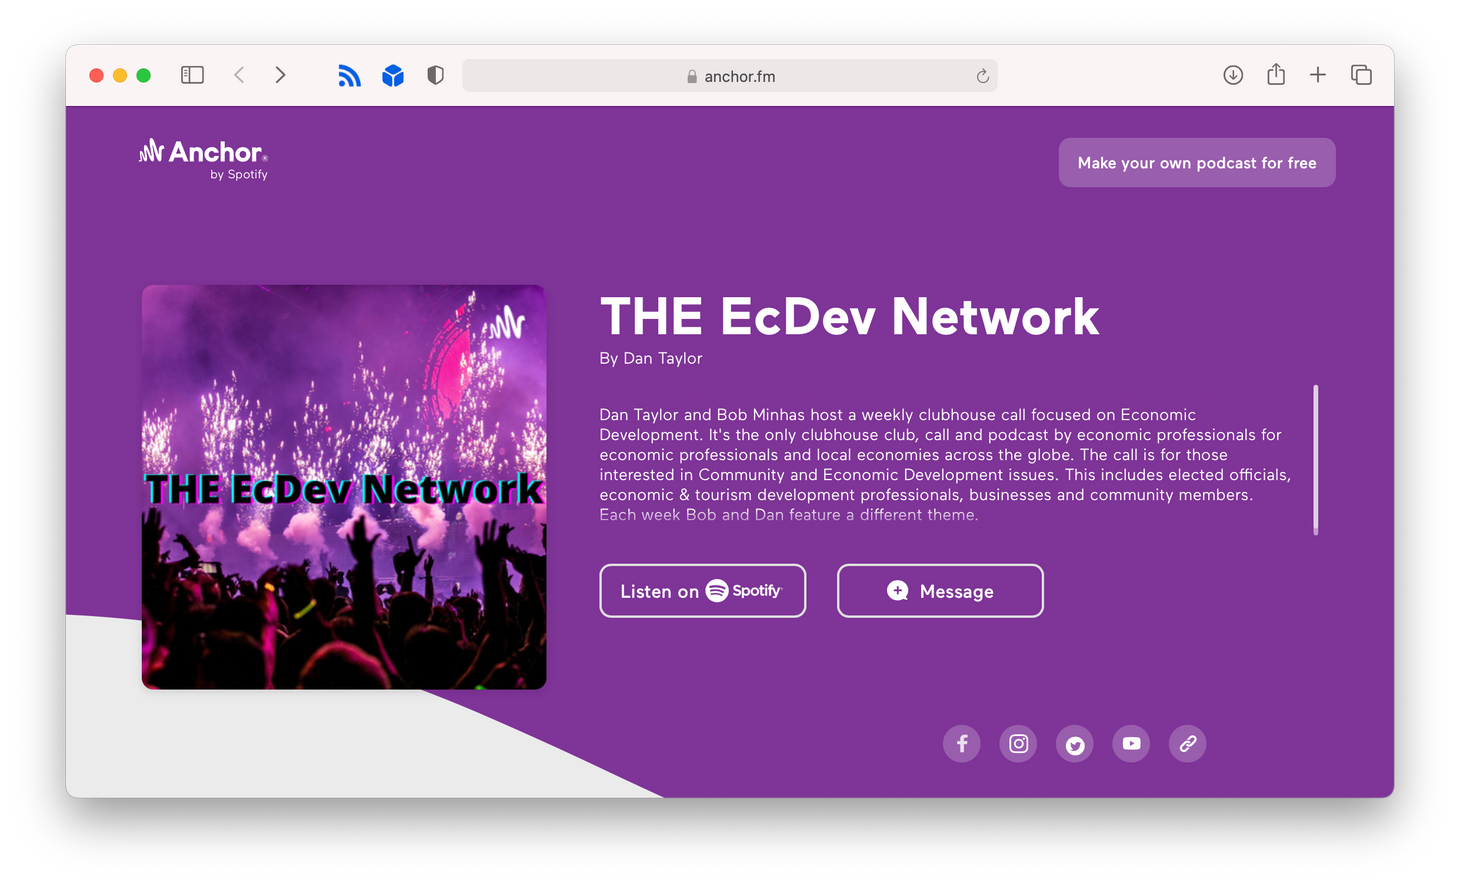 THE EcDev Network